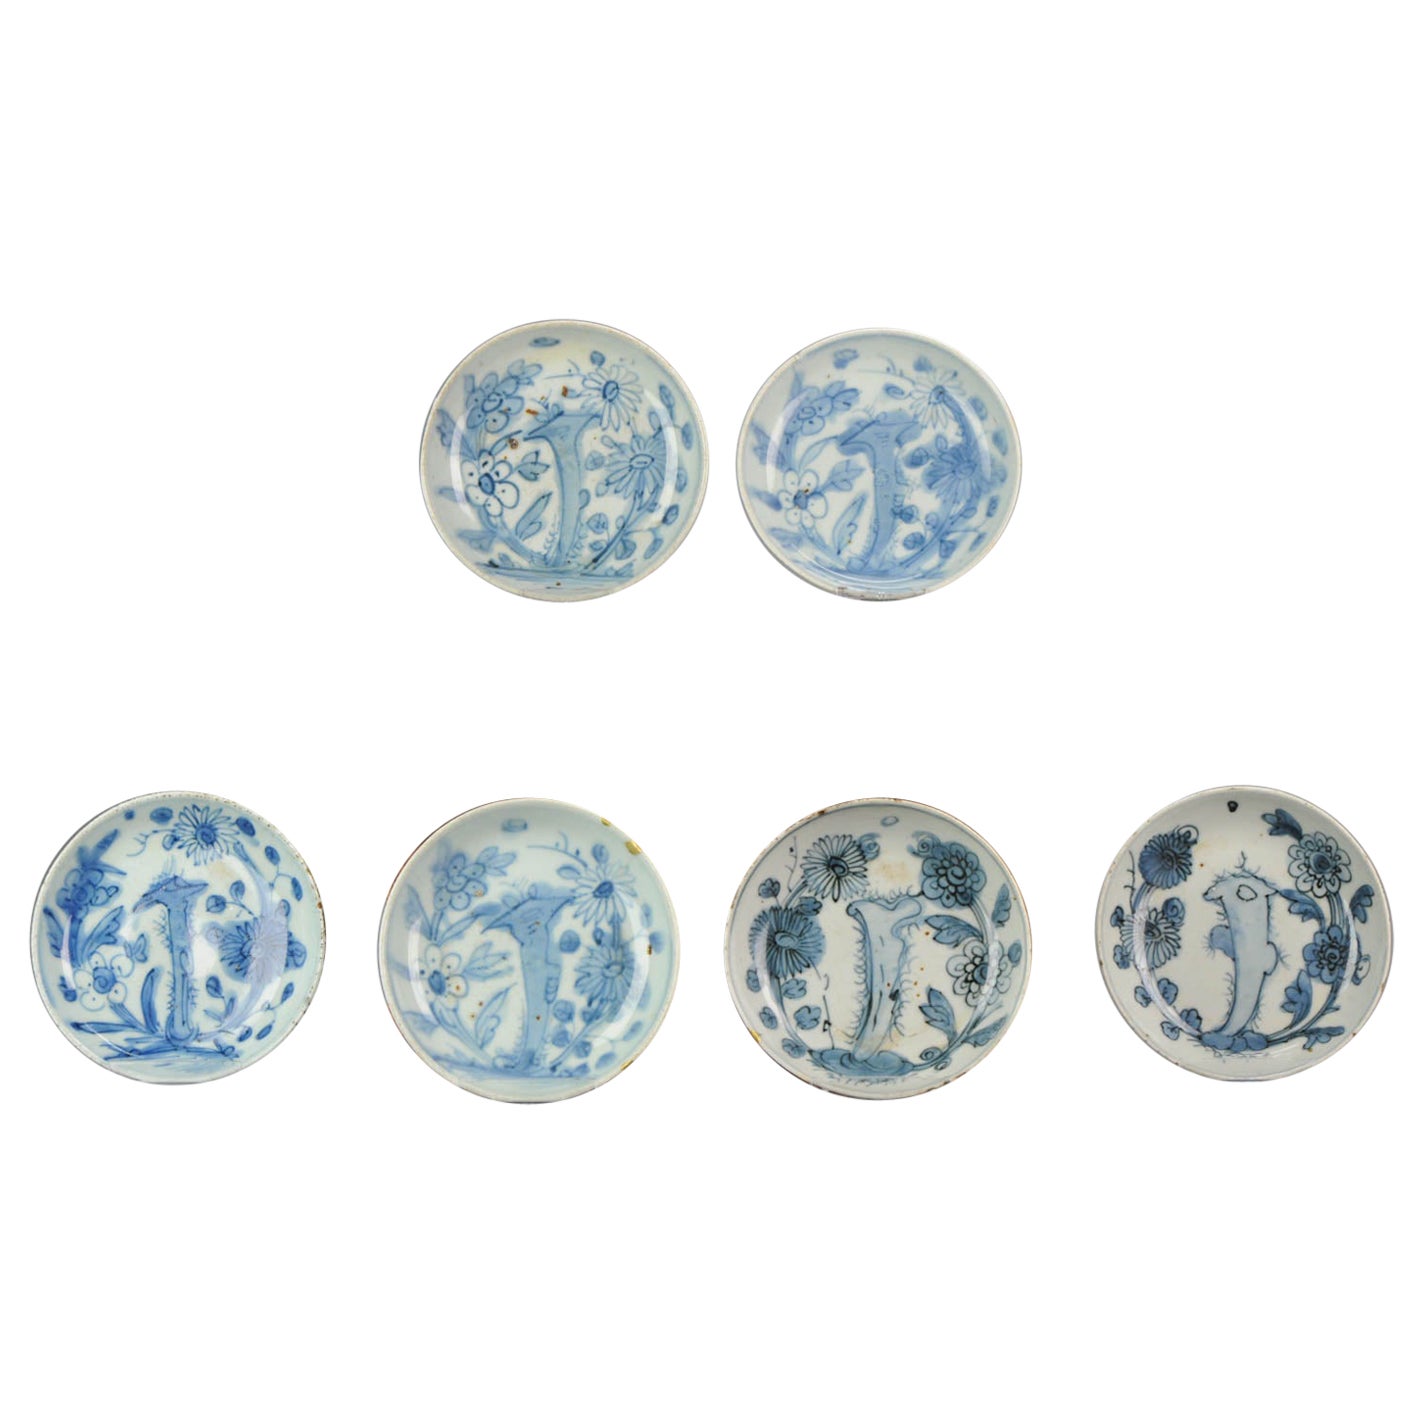 Antikes chinesisches Porzellan aus der Ming-Periode Porzellan Jiajing oder Wanli, 16. Jahrhundert